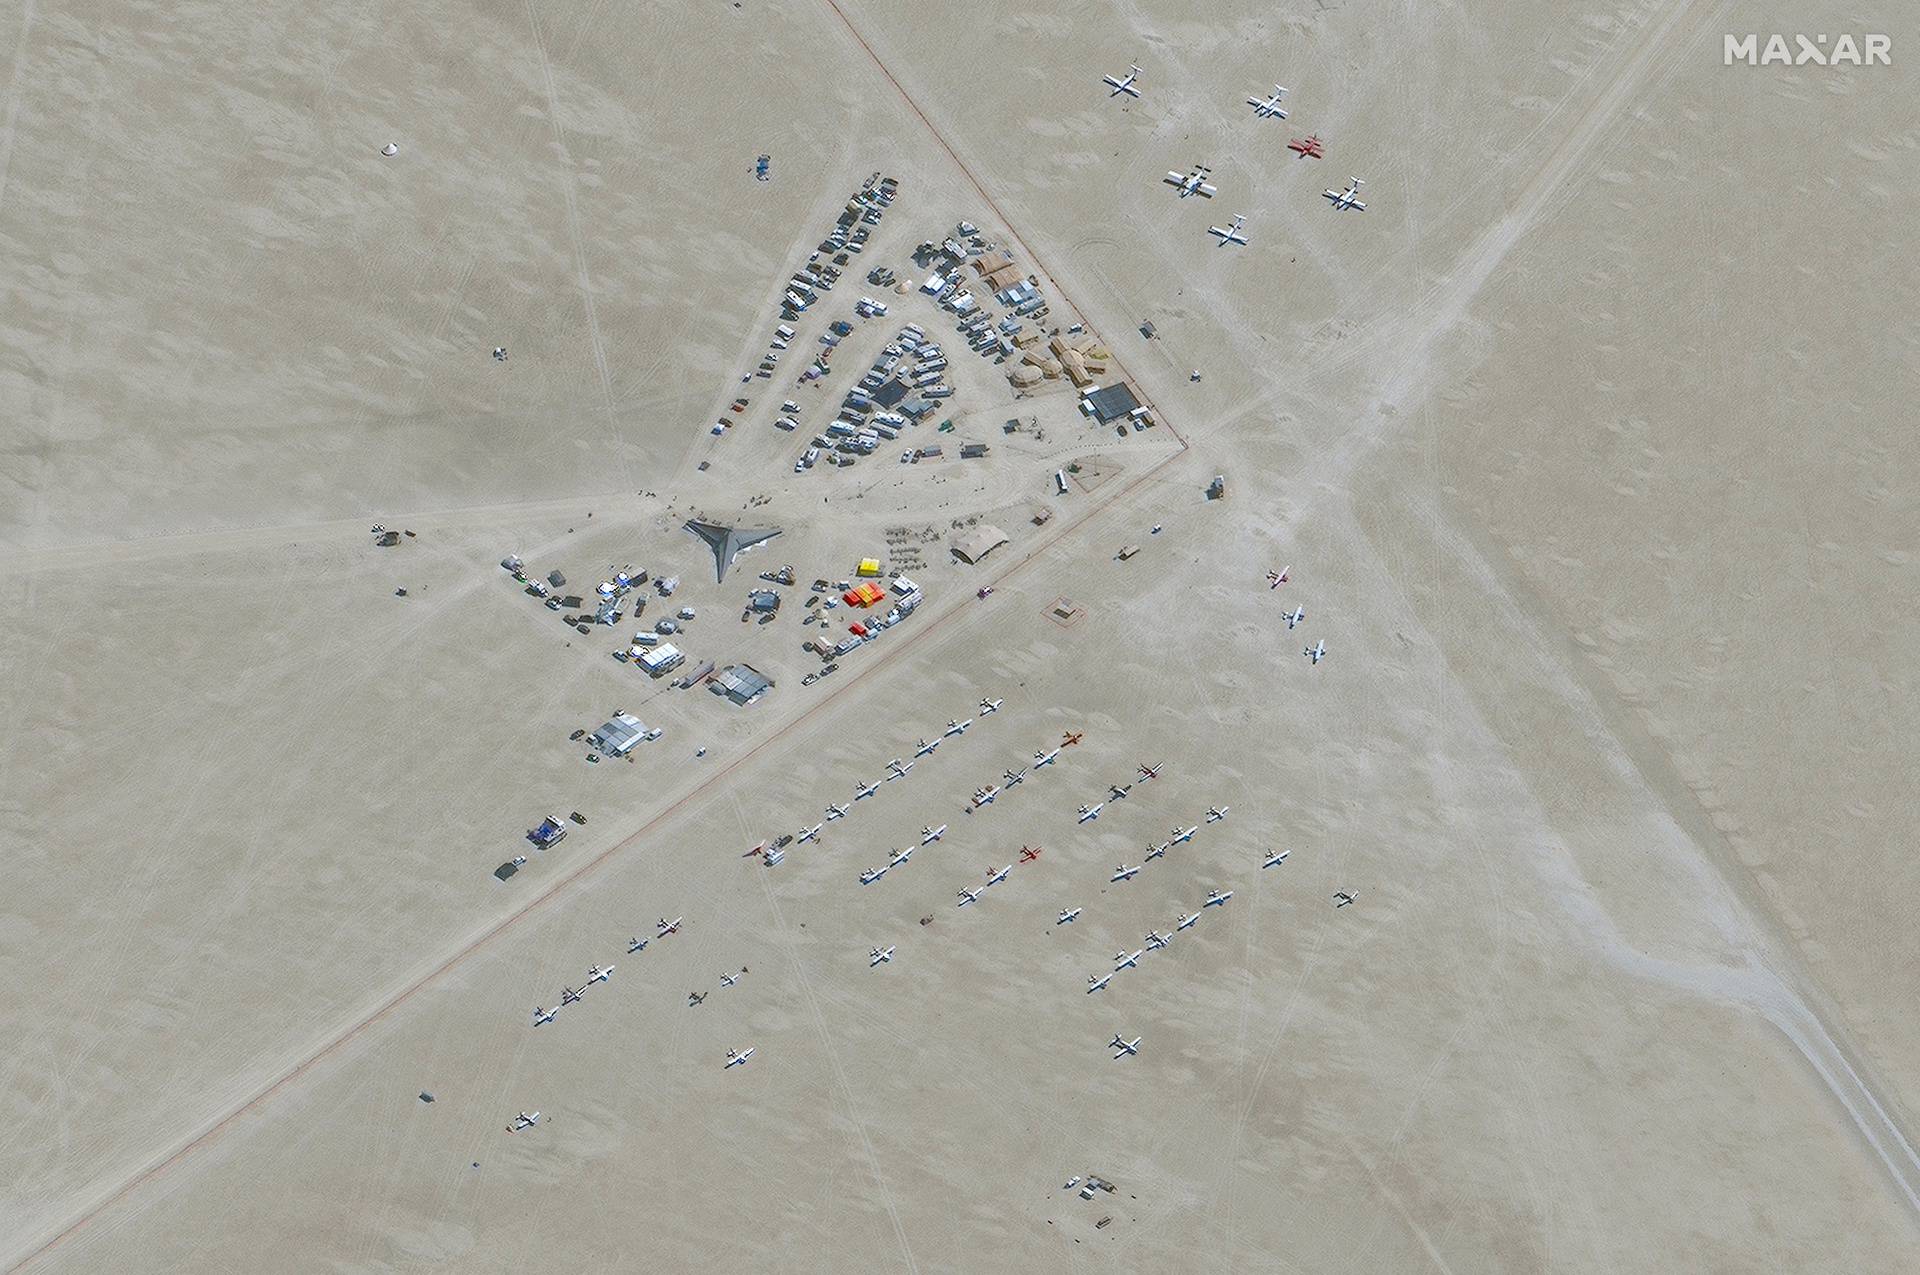 2023 Burning Man festival in Nevada